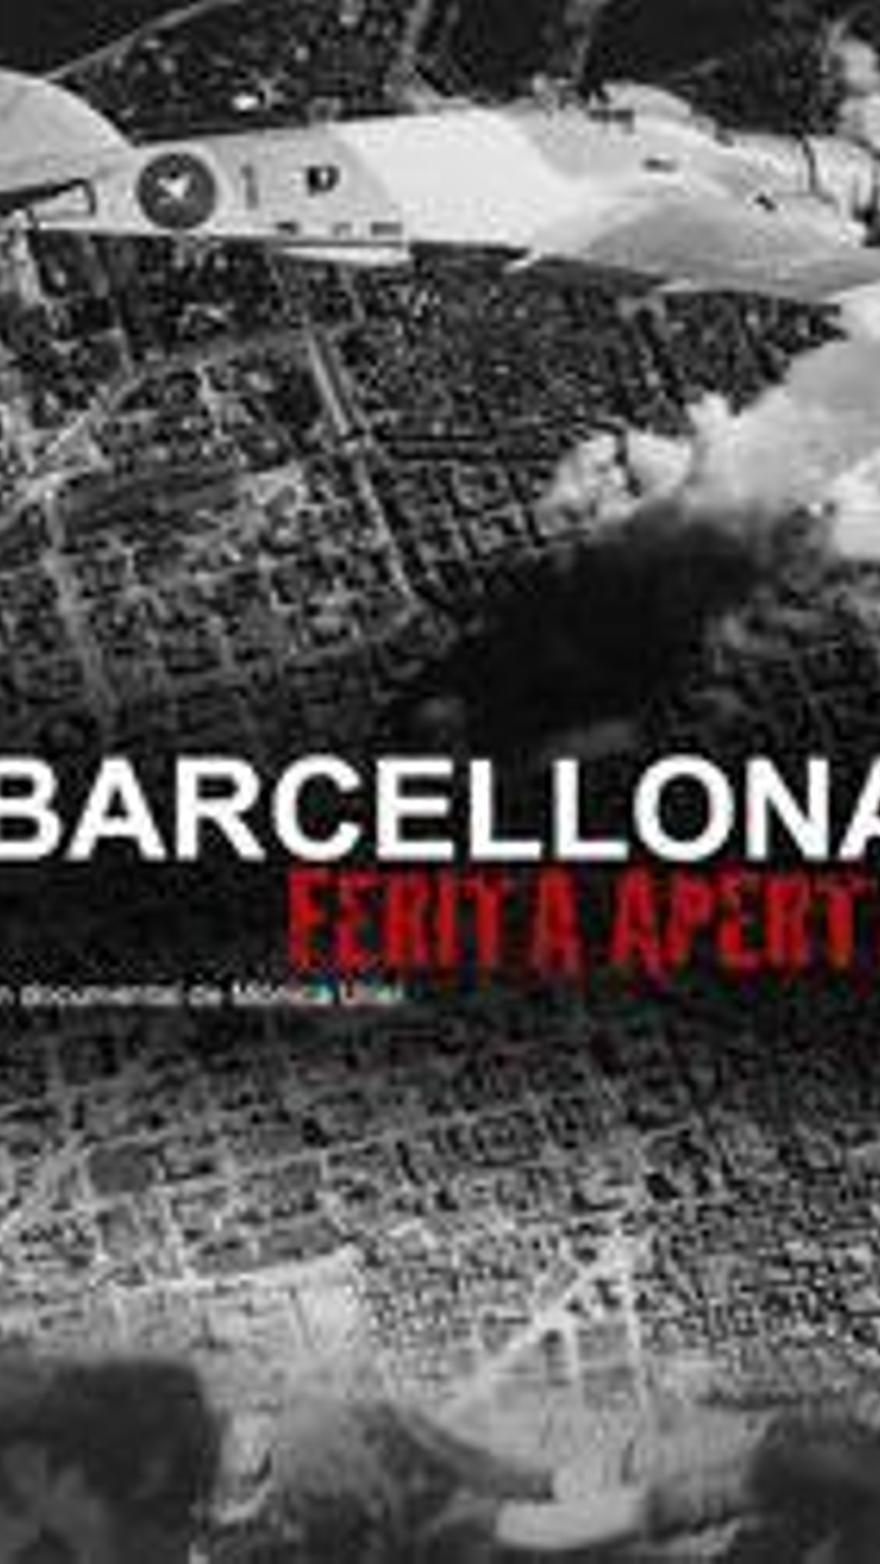 Barcelona, herida abierta